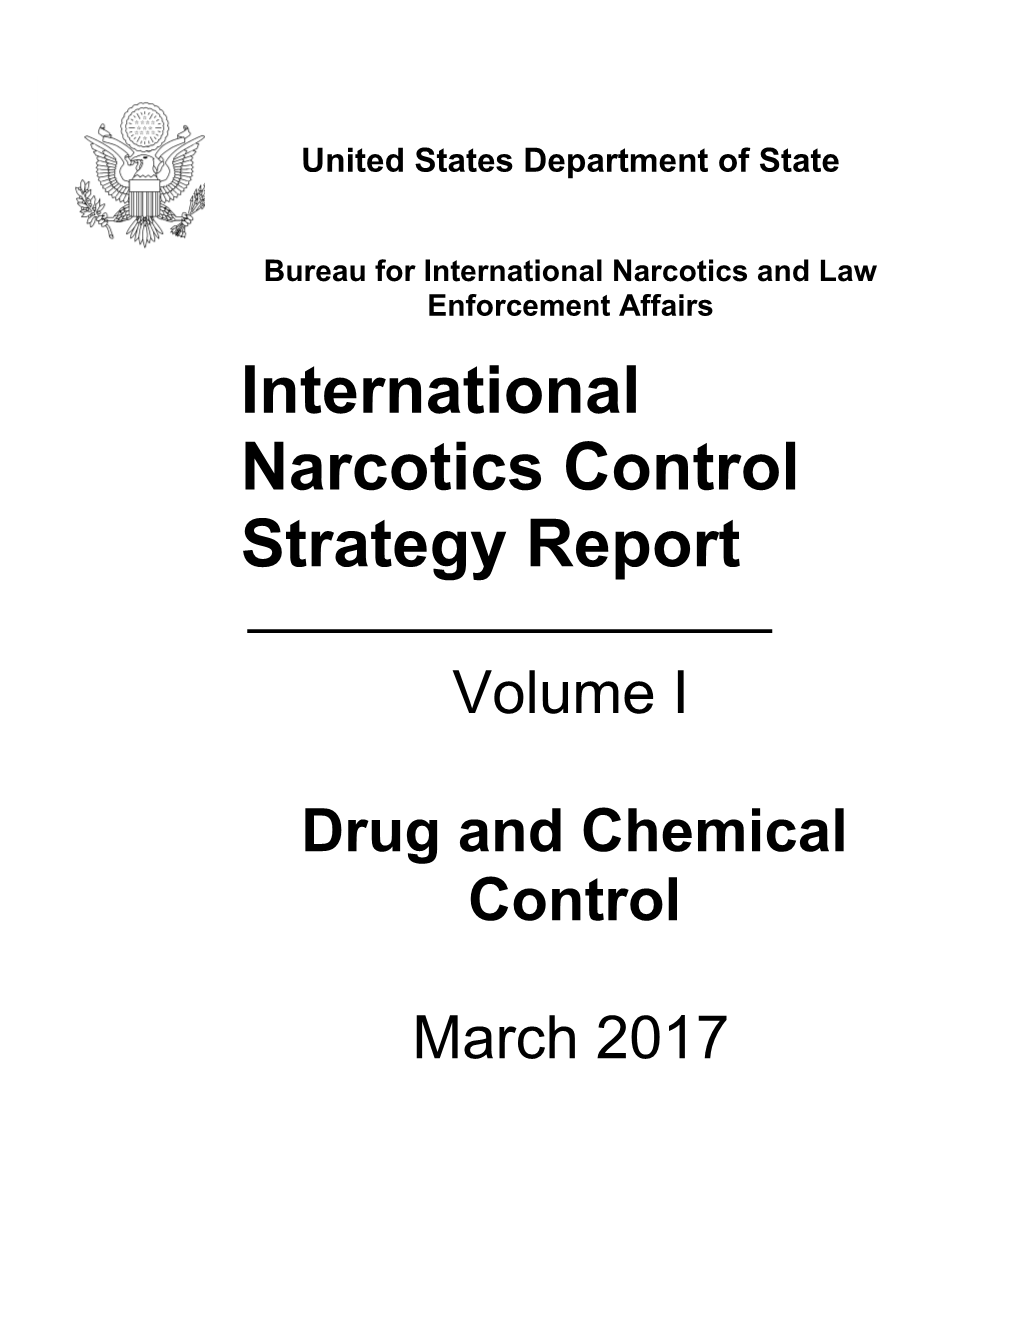 2017 International Narcotics Control Strategy Report